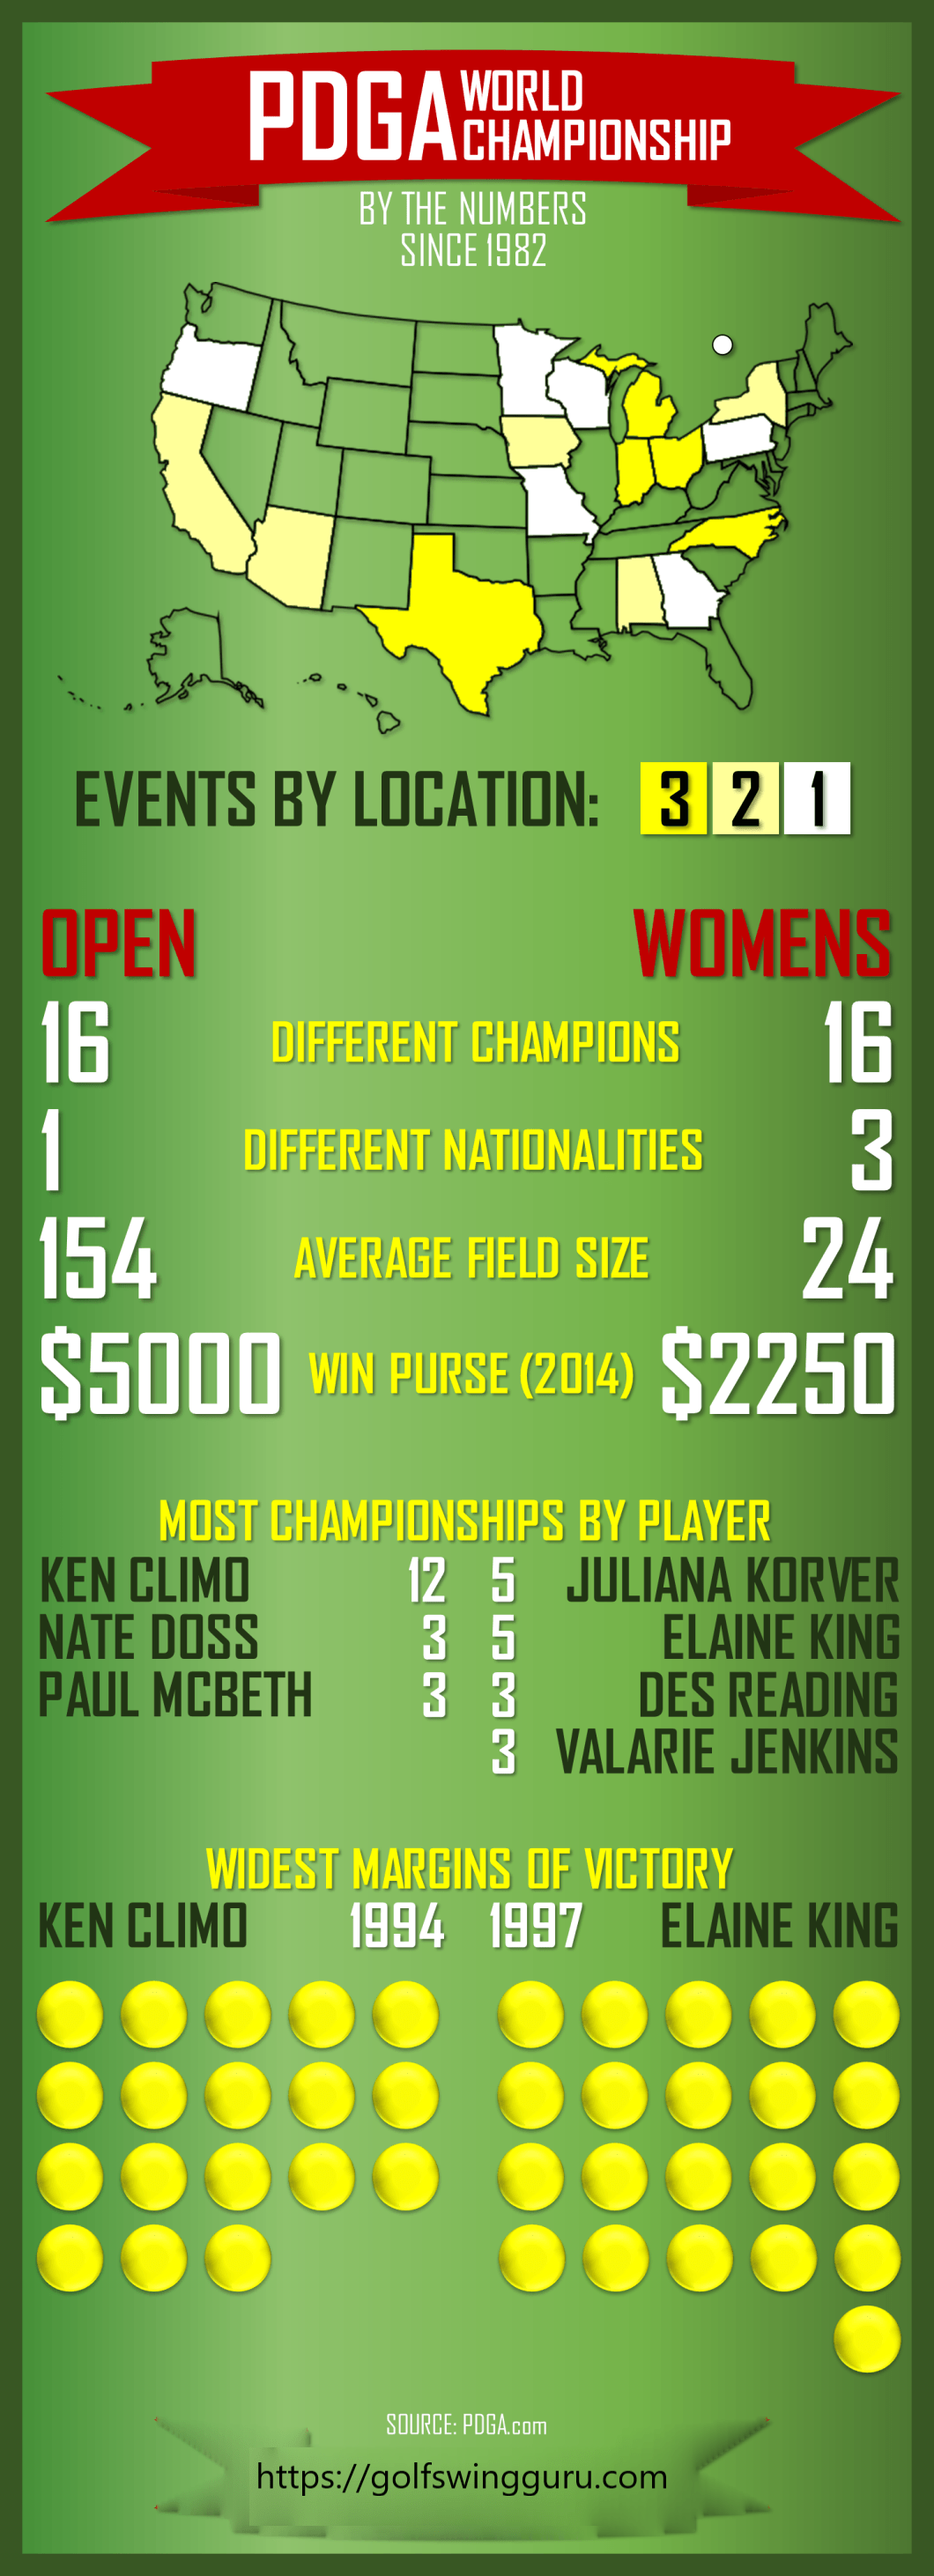 pdga championship infographic